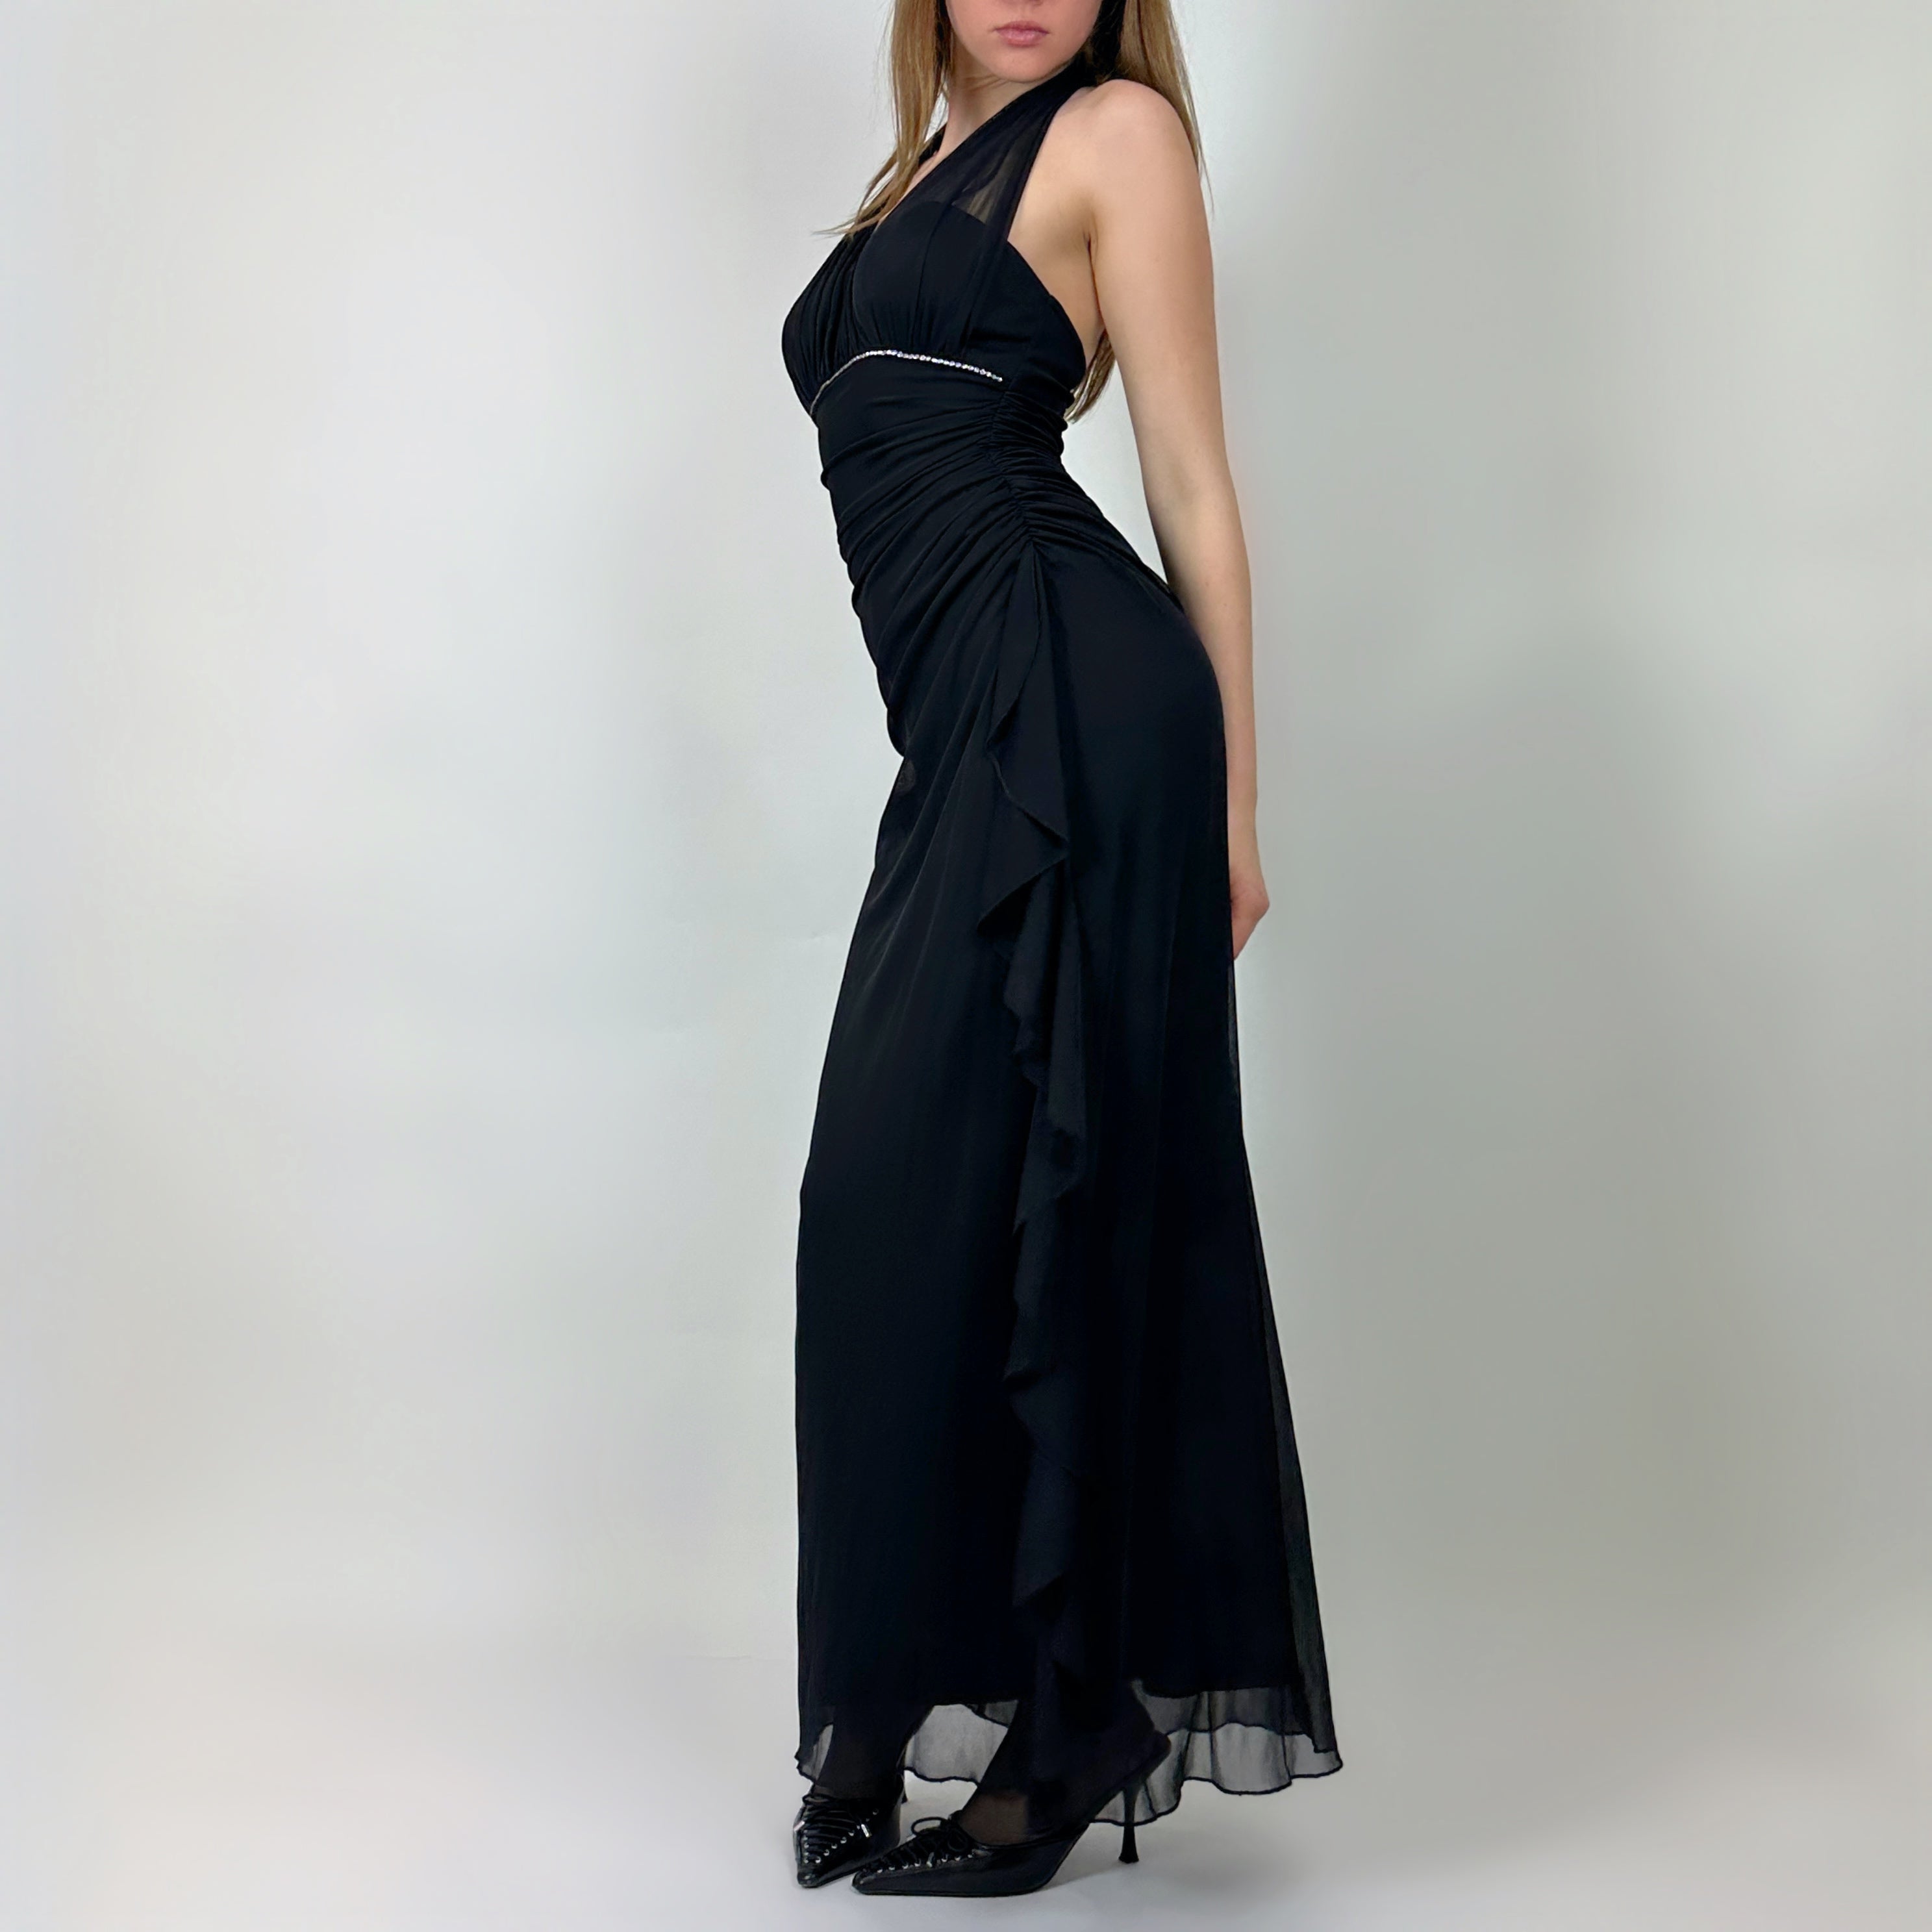 Vintage Noir Mesh Overlay Flutter Gown (XS/S)